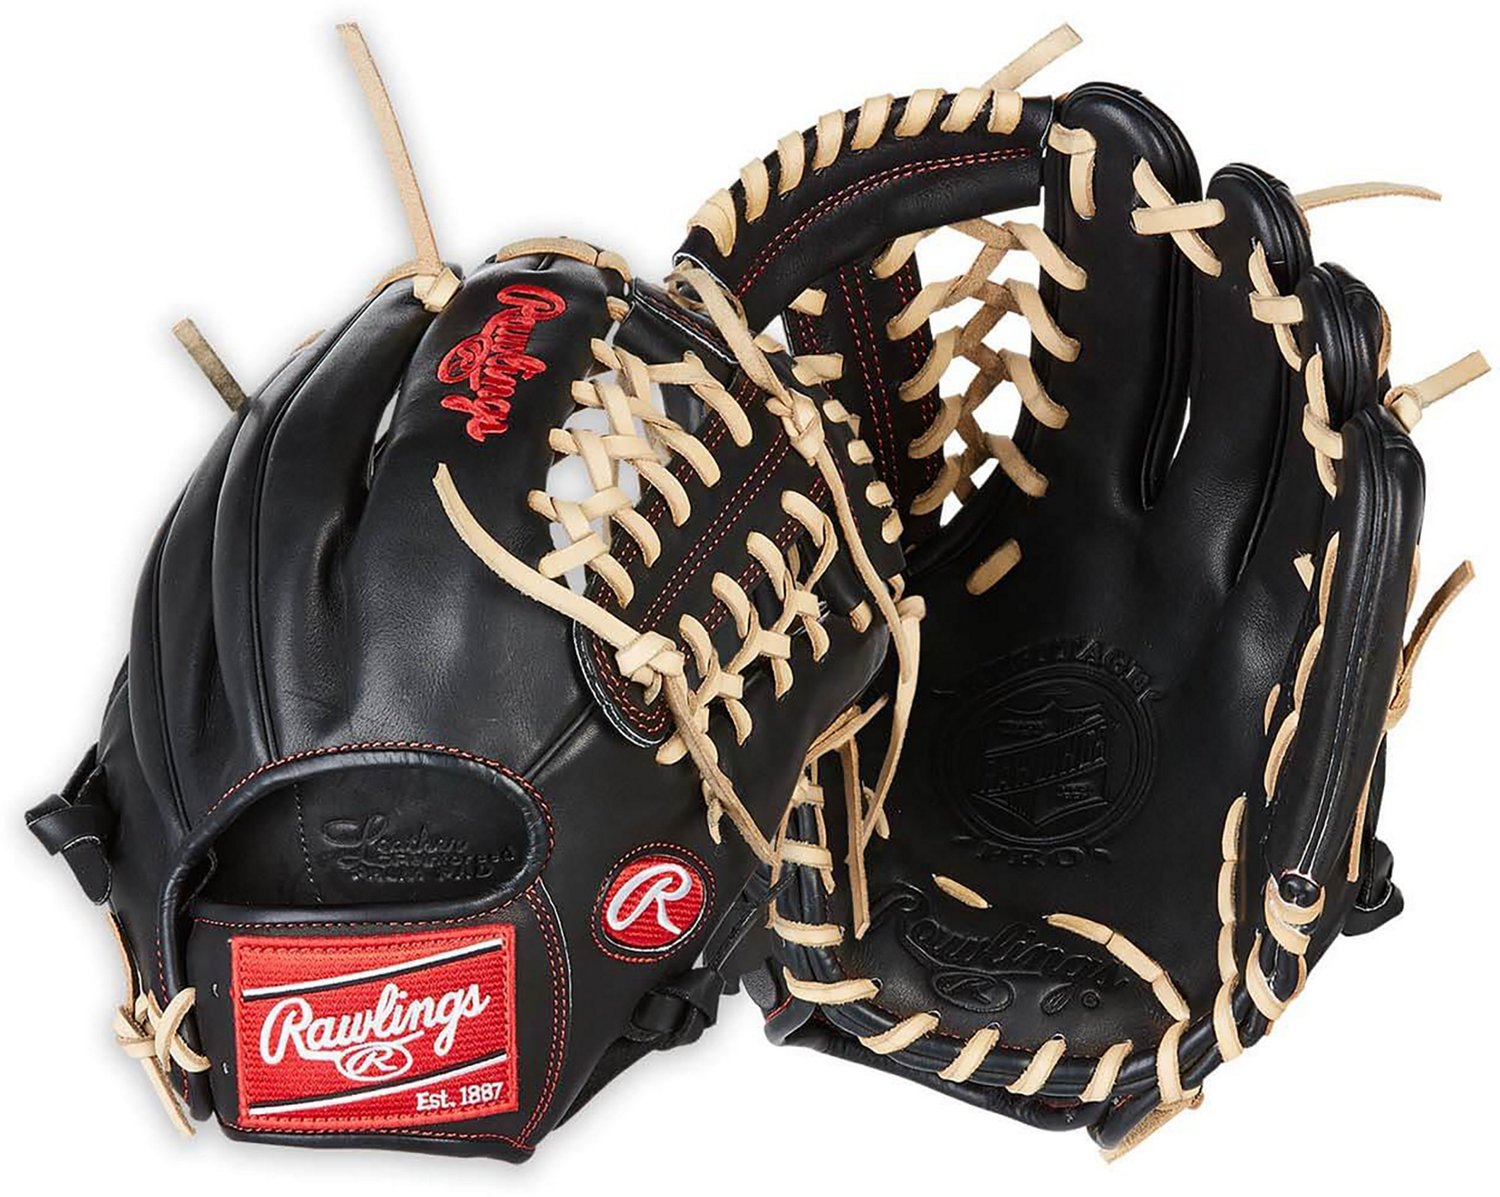 Camoflague baseball glove, 44 Pro Gloves Pros